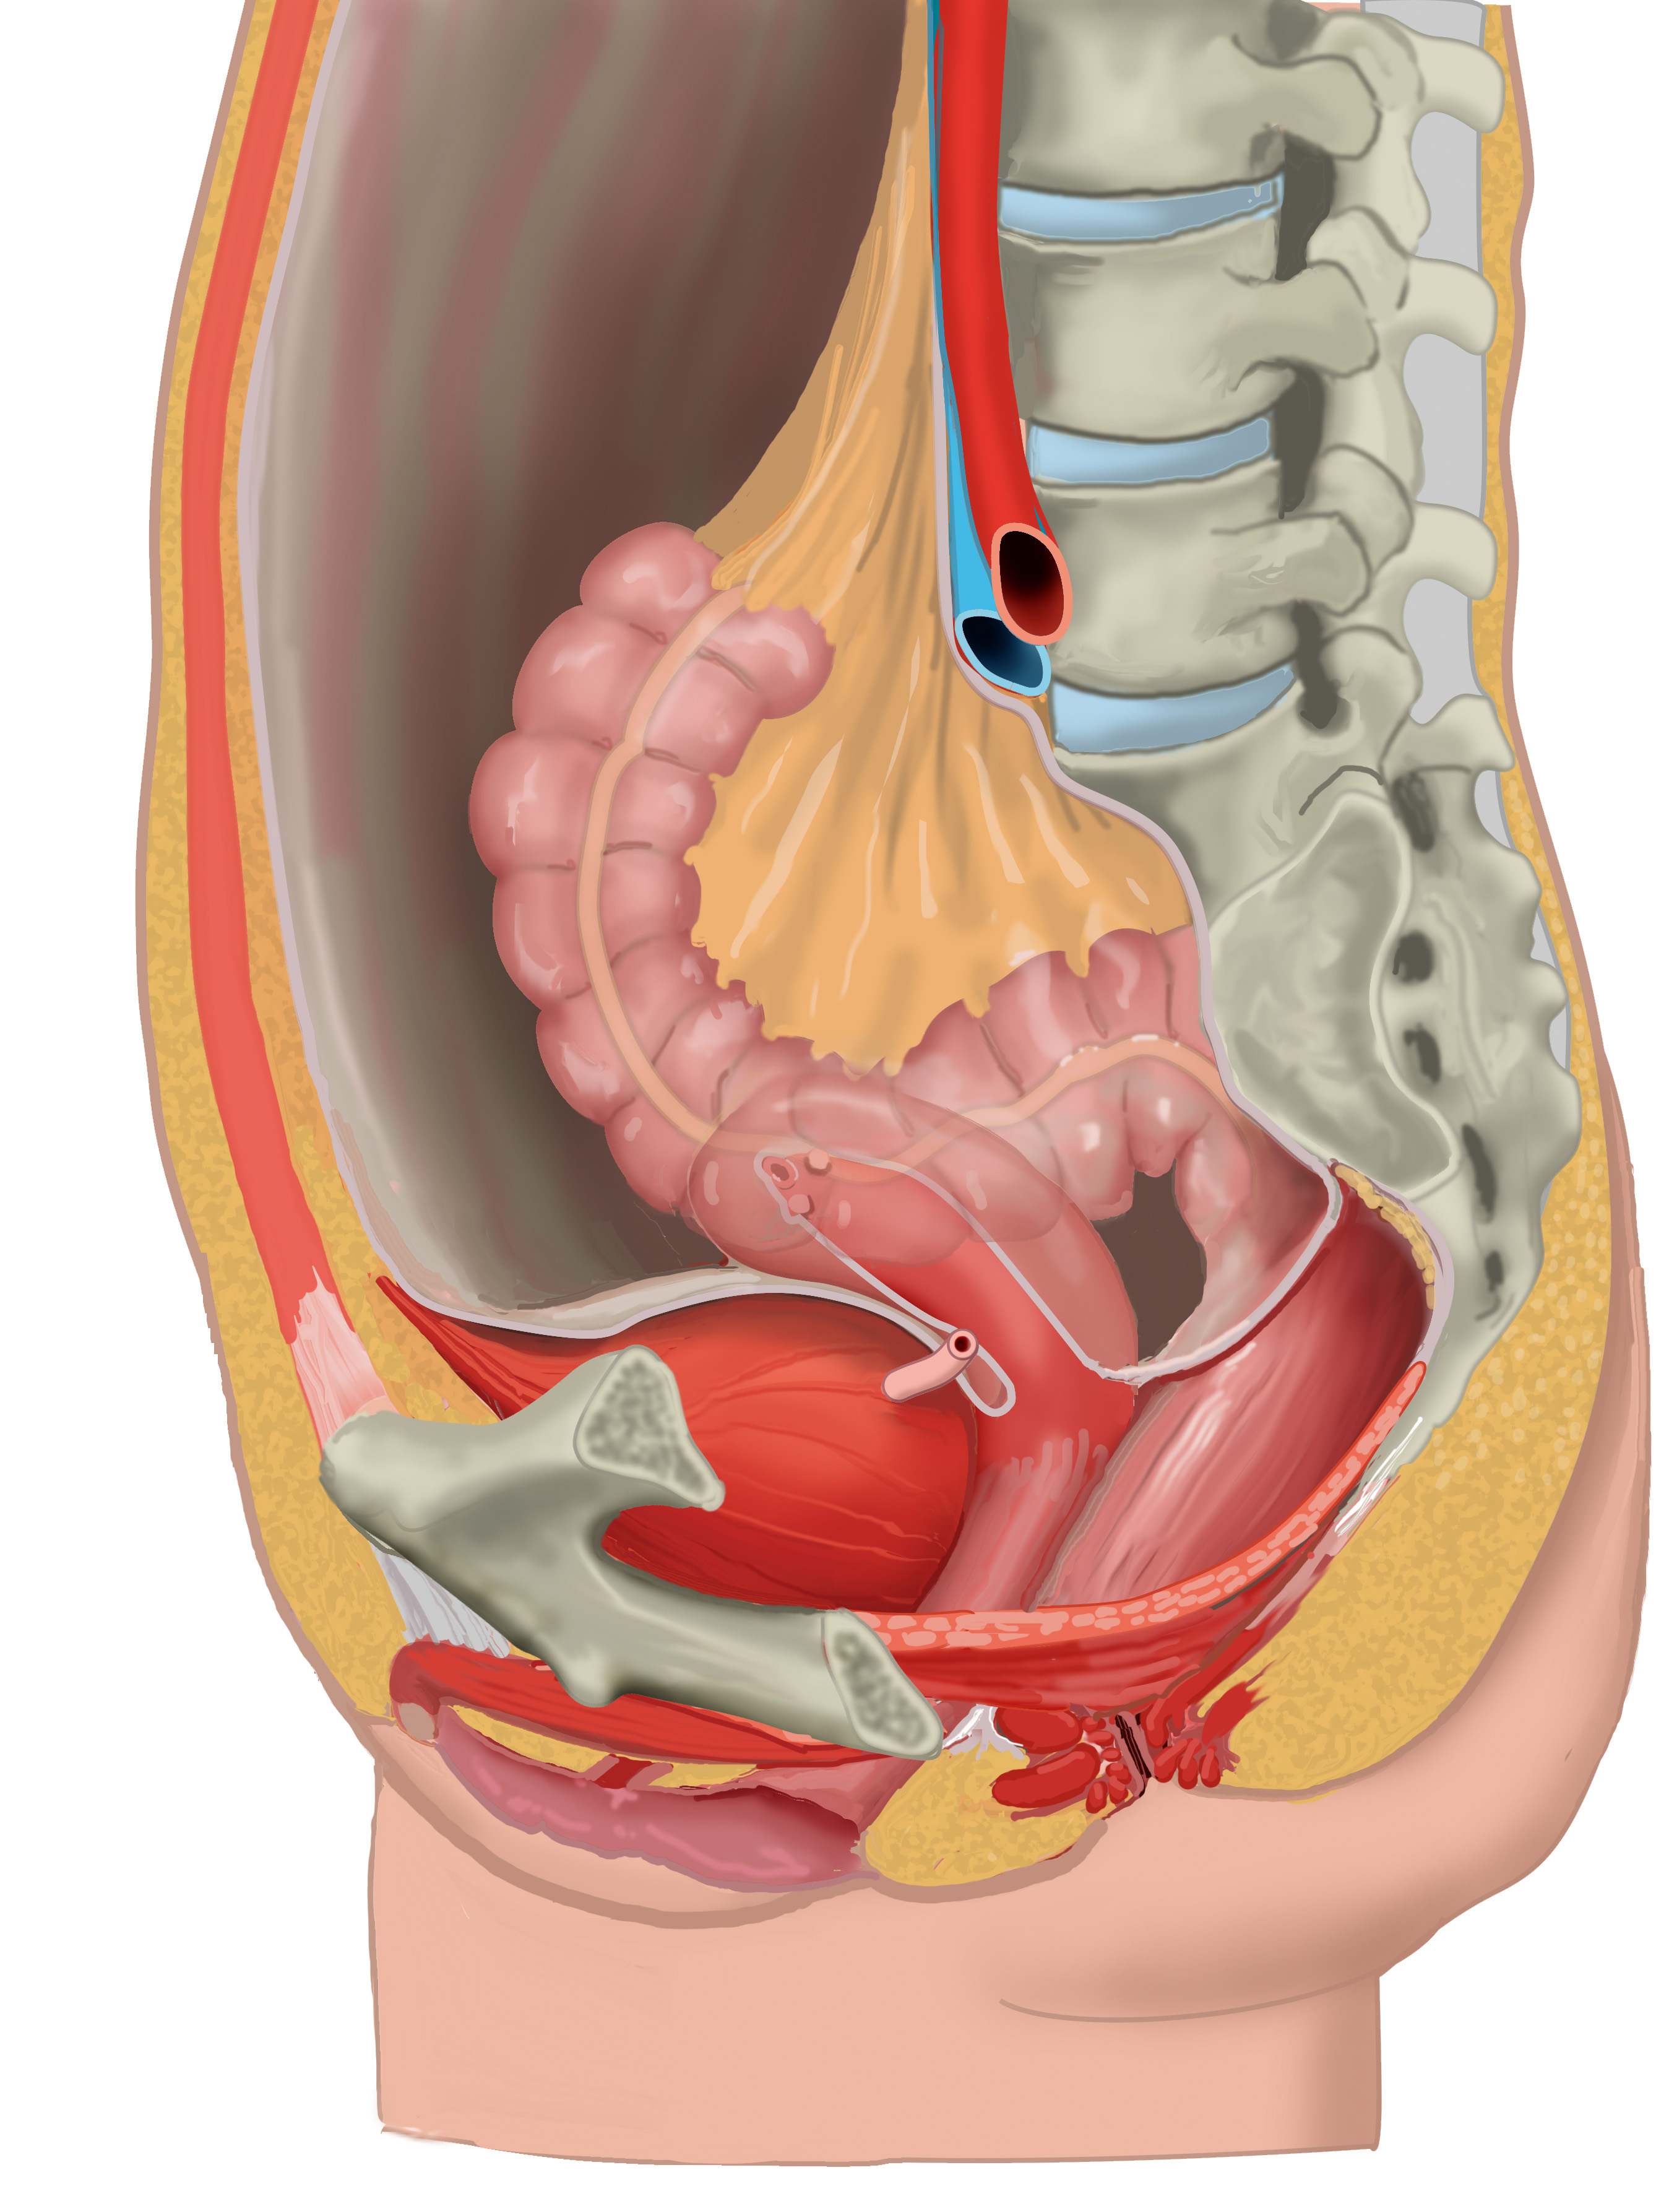 Anatomy of the female pelvic area